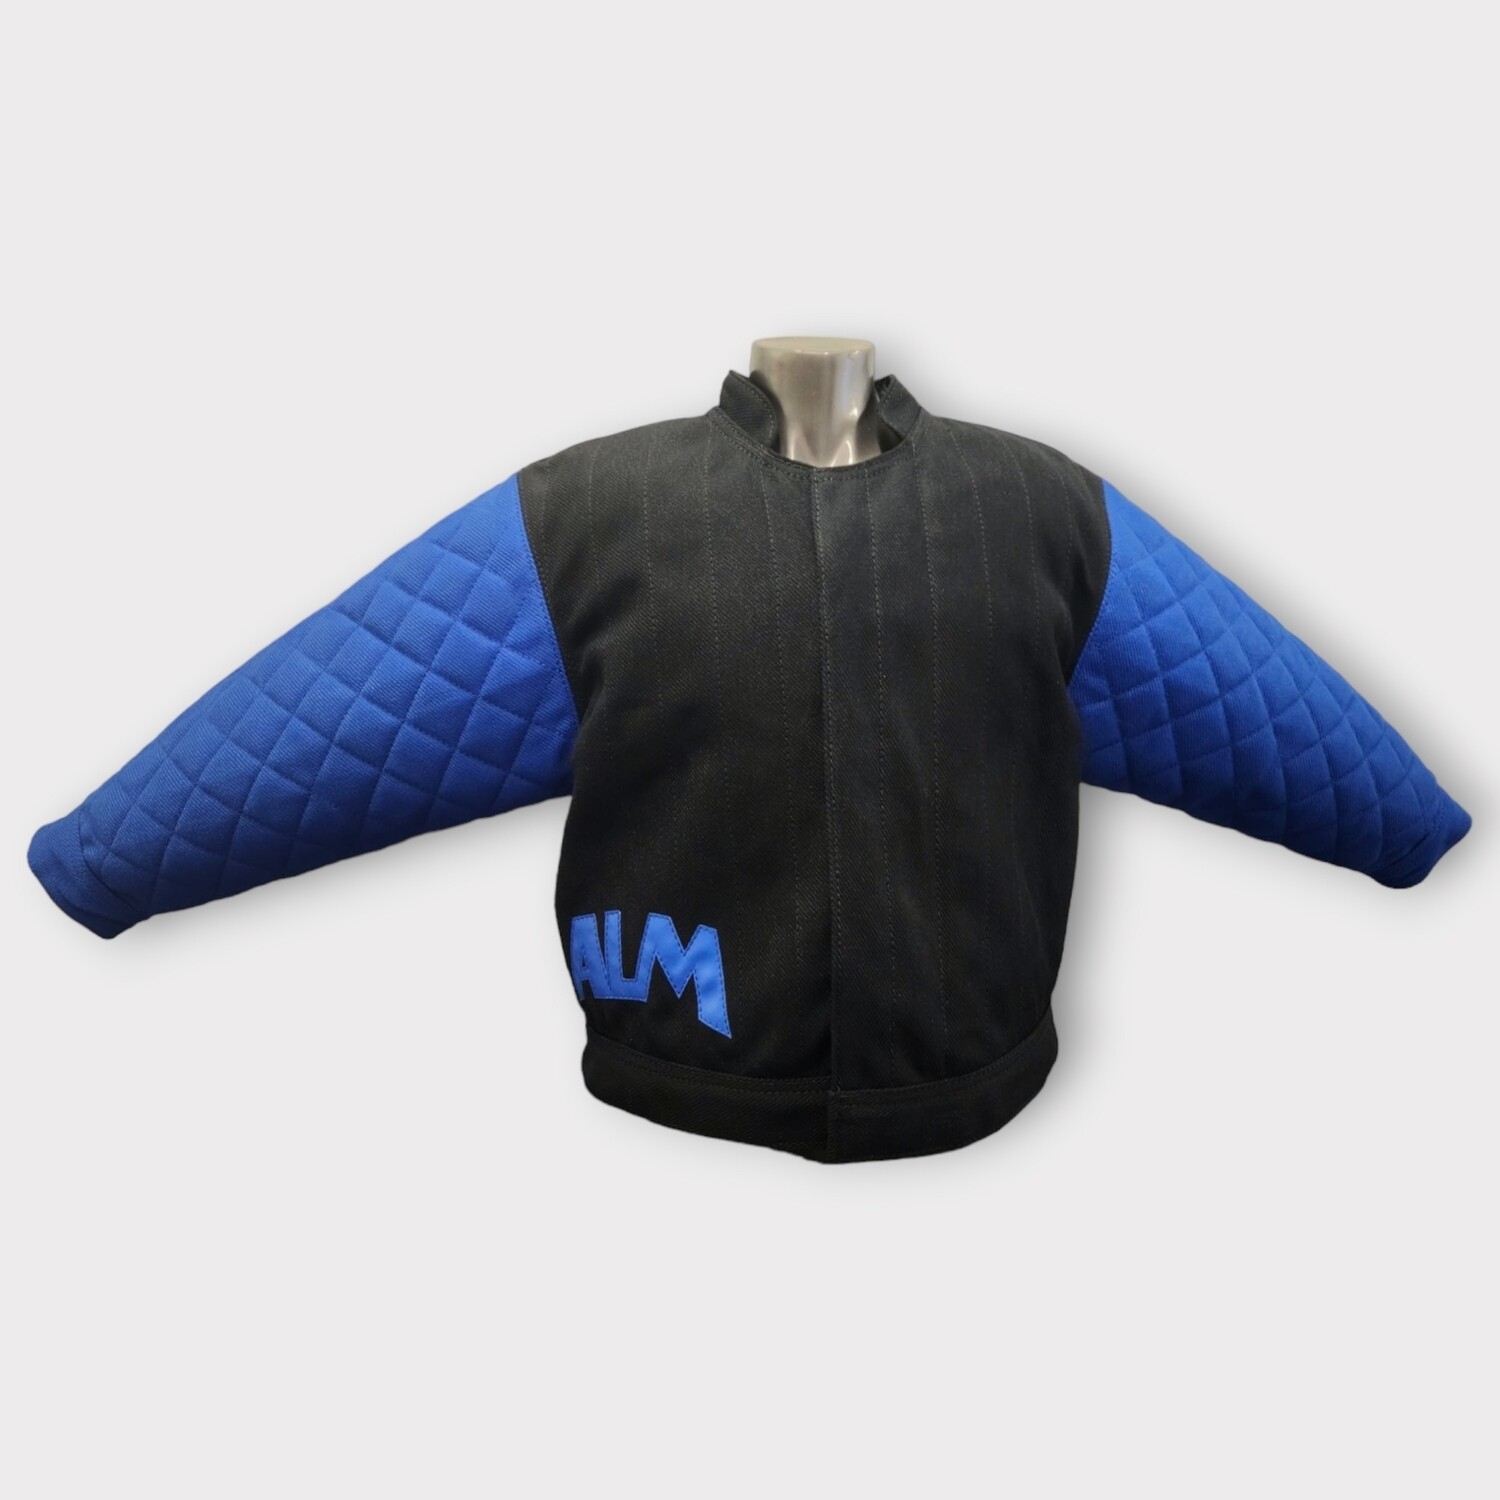 XXL Training jacket.